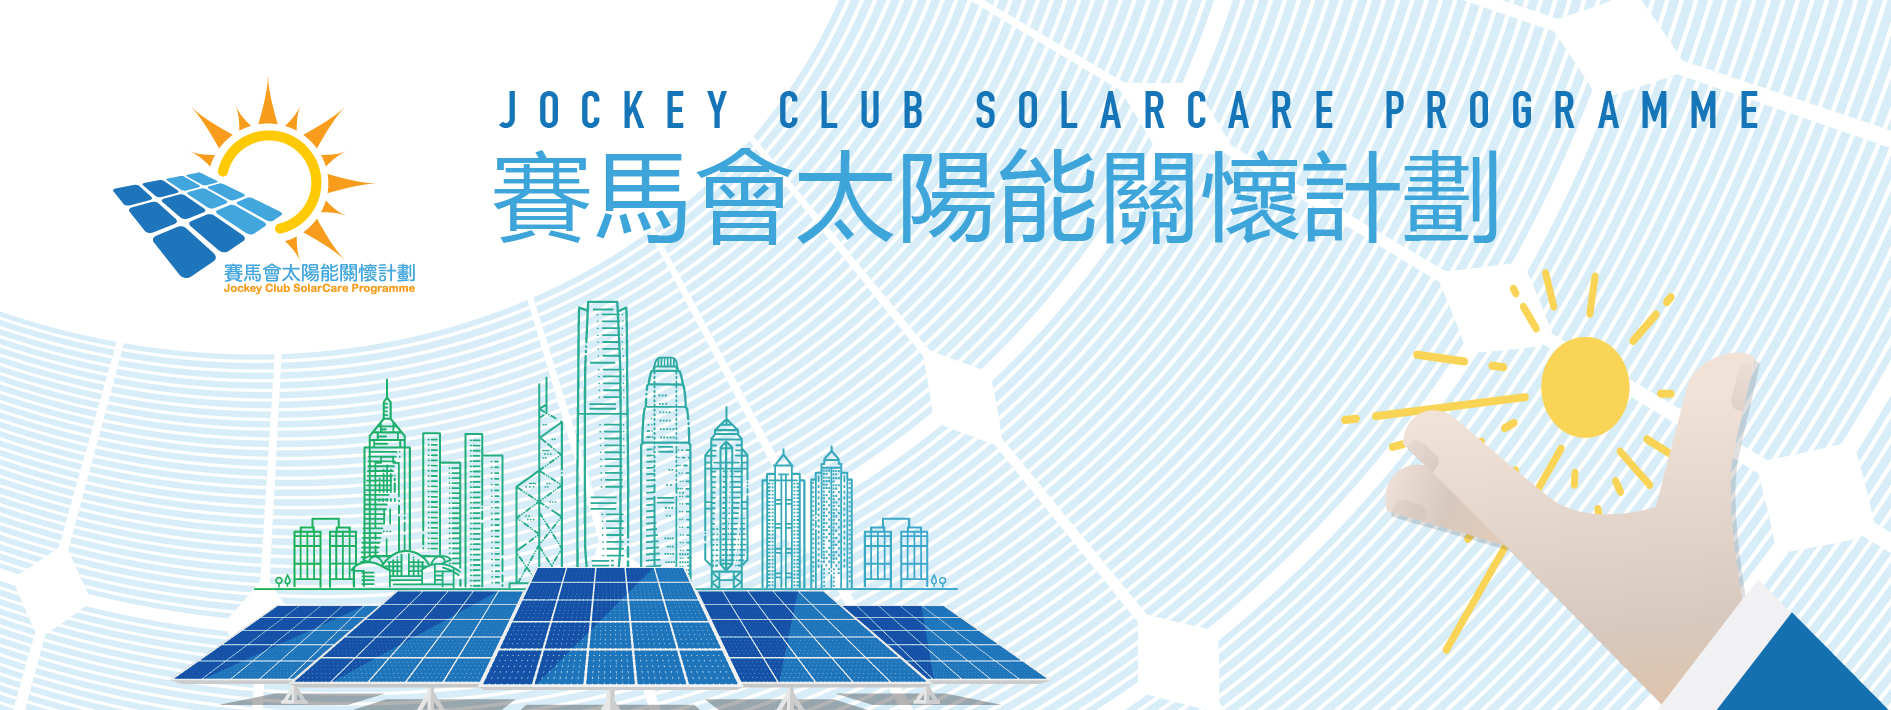 Jockey Club SolarCare Programme Top Banner